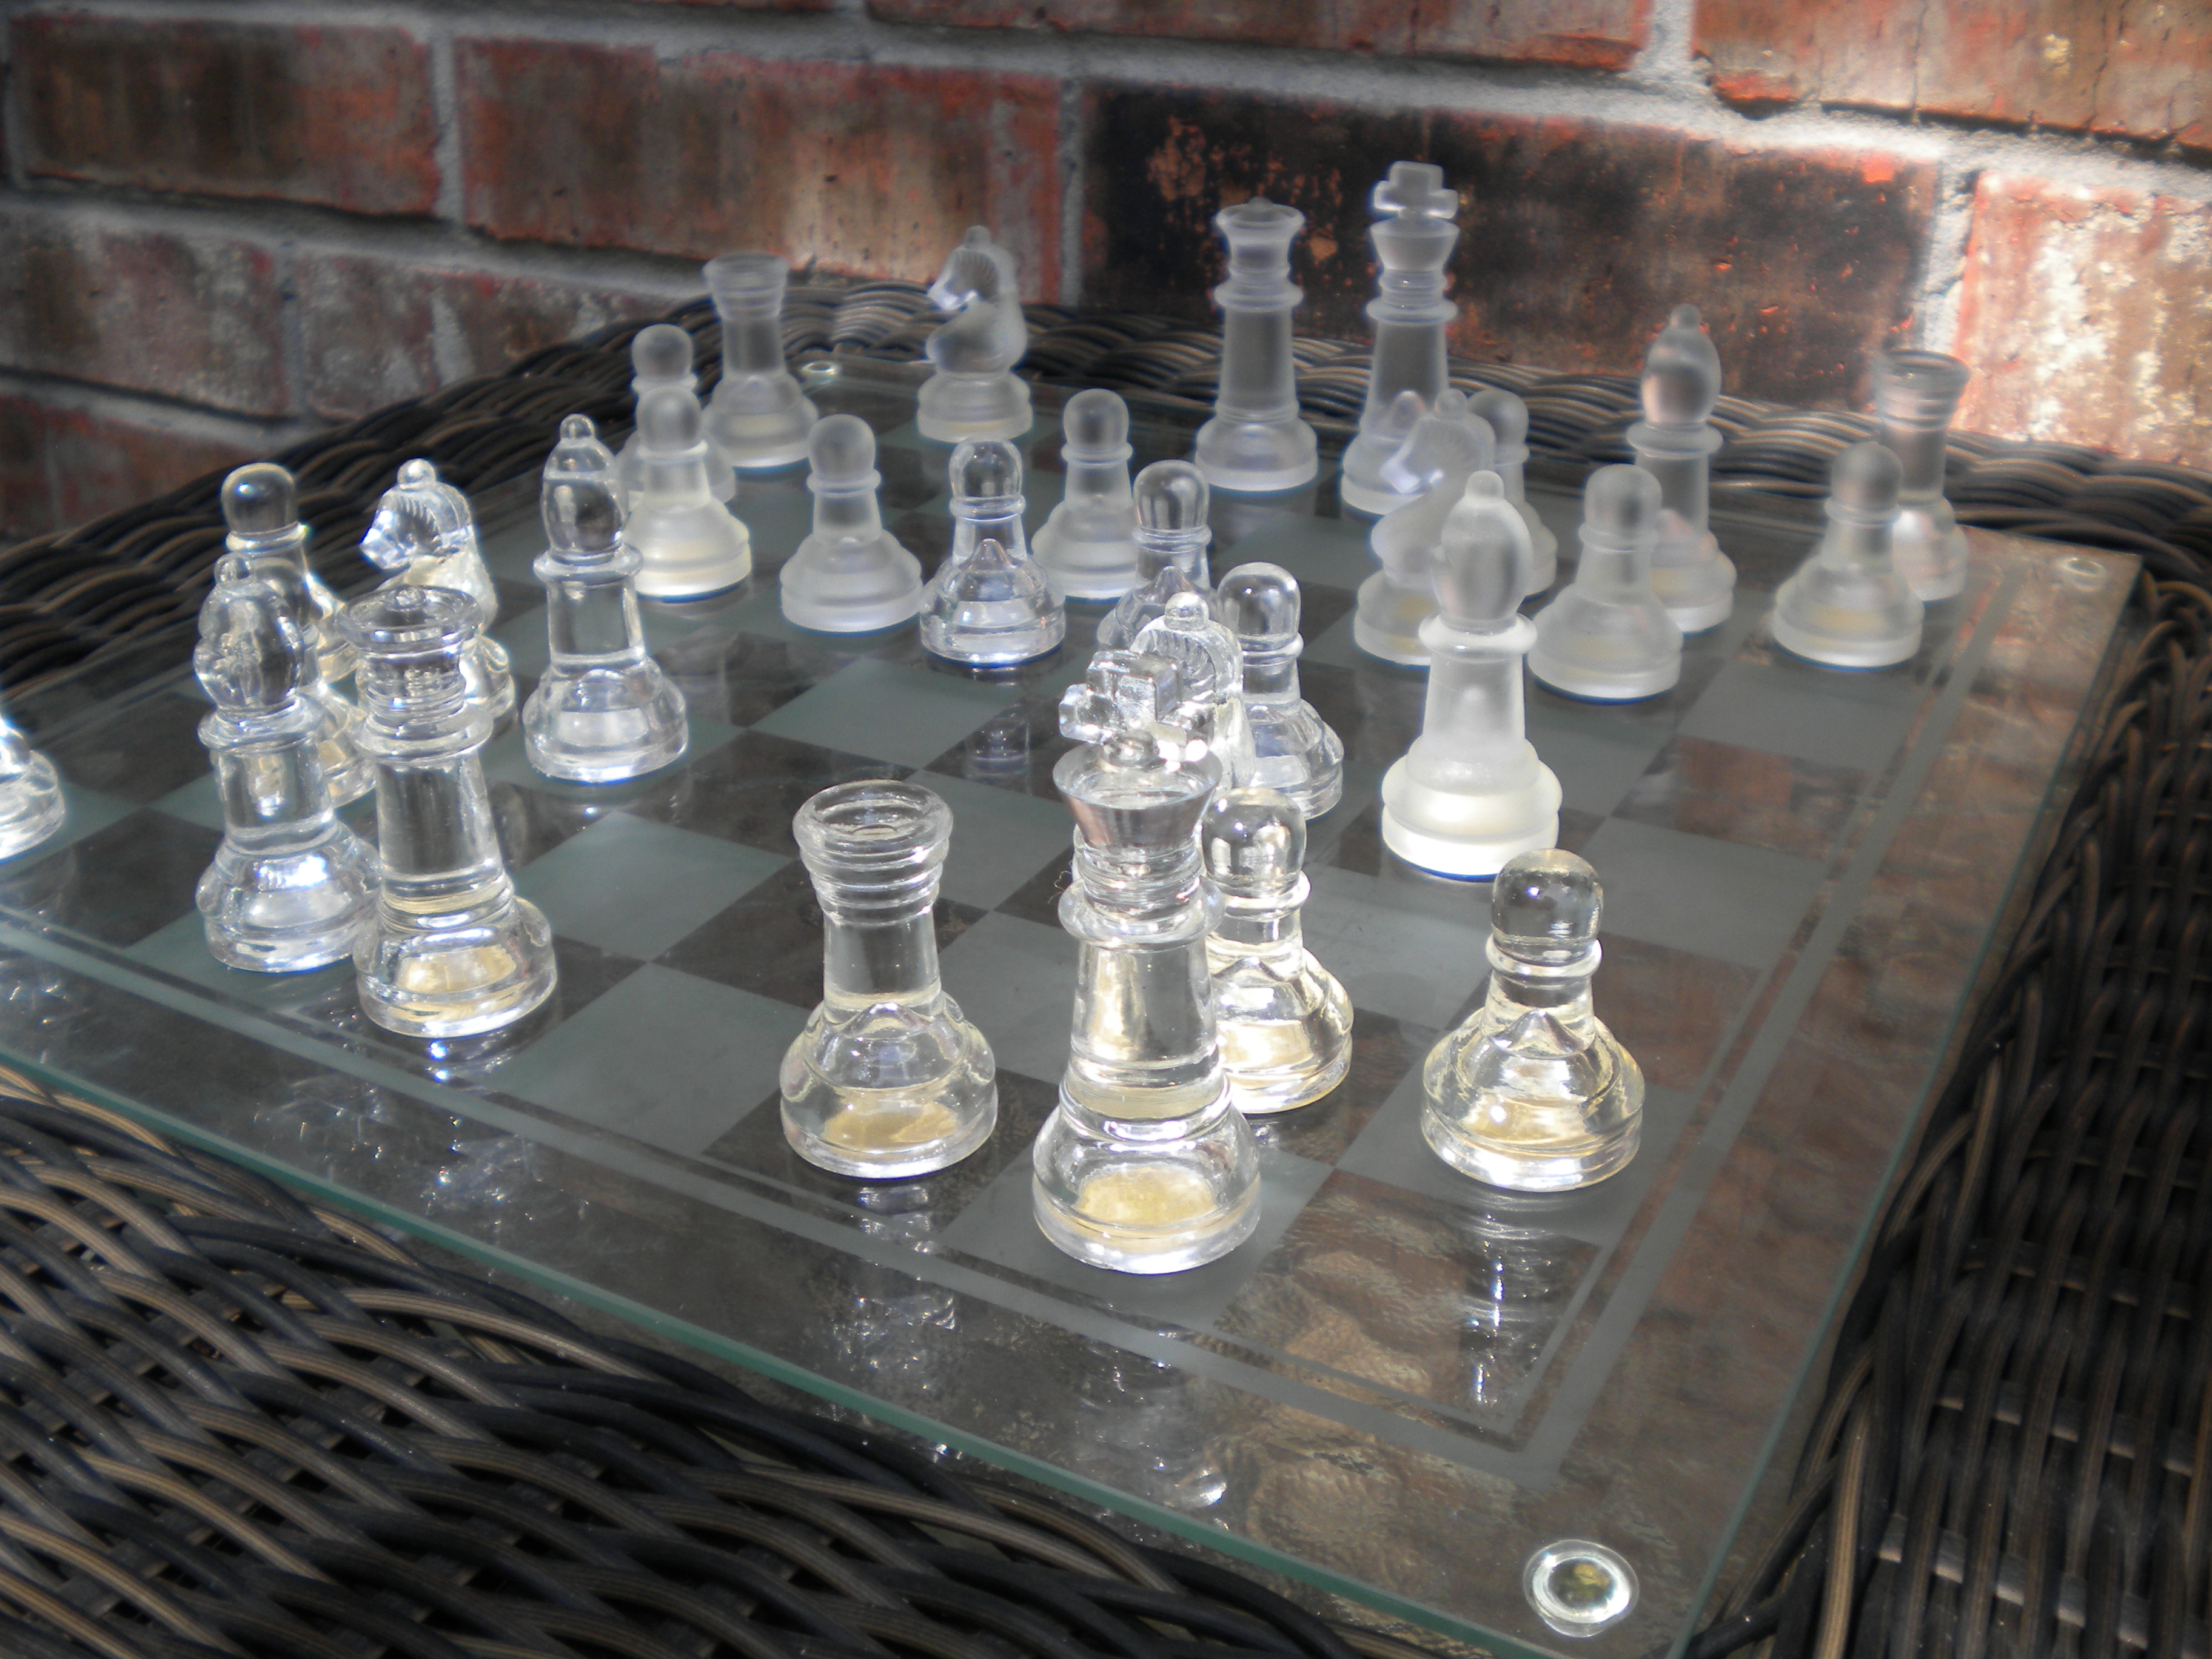 Gulf of Mexico chess set